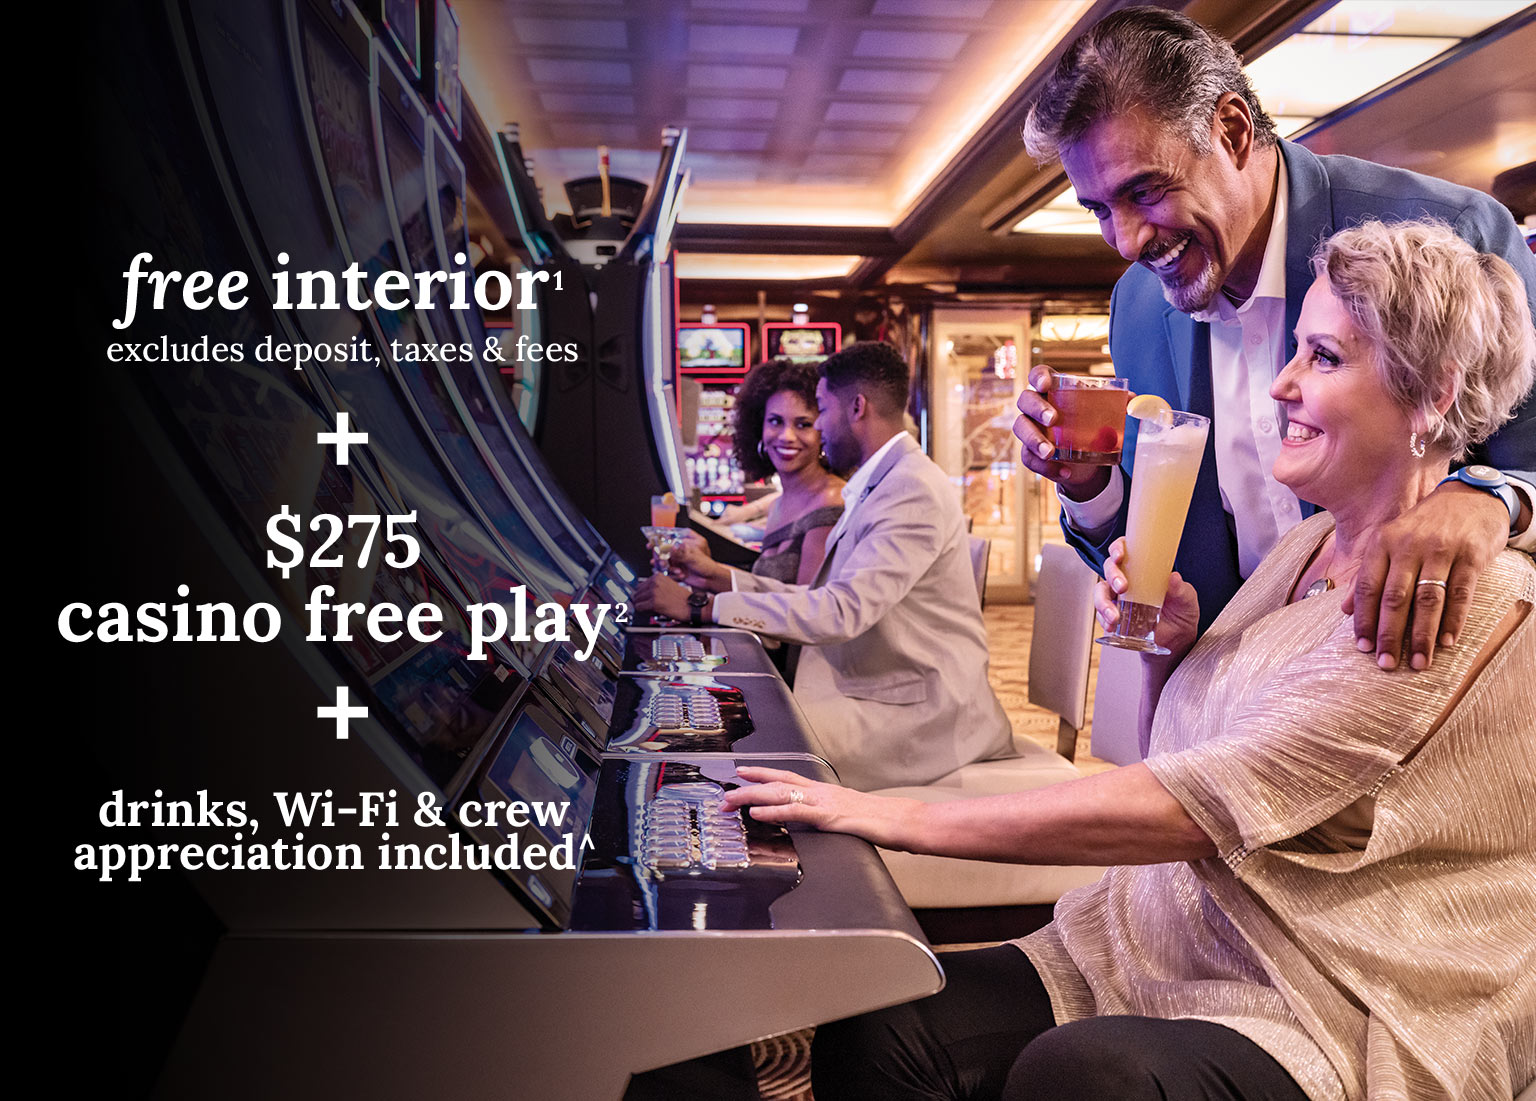 free interior + $275 casino free play + drinks, Wi-Fi & crew appreciation. Click here to book.